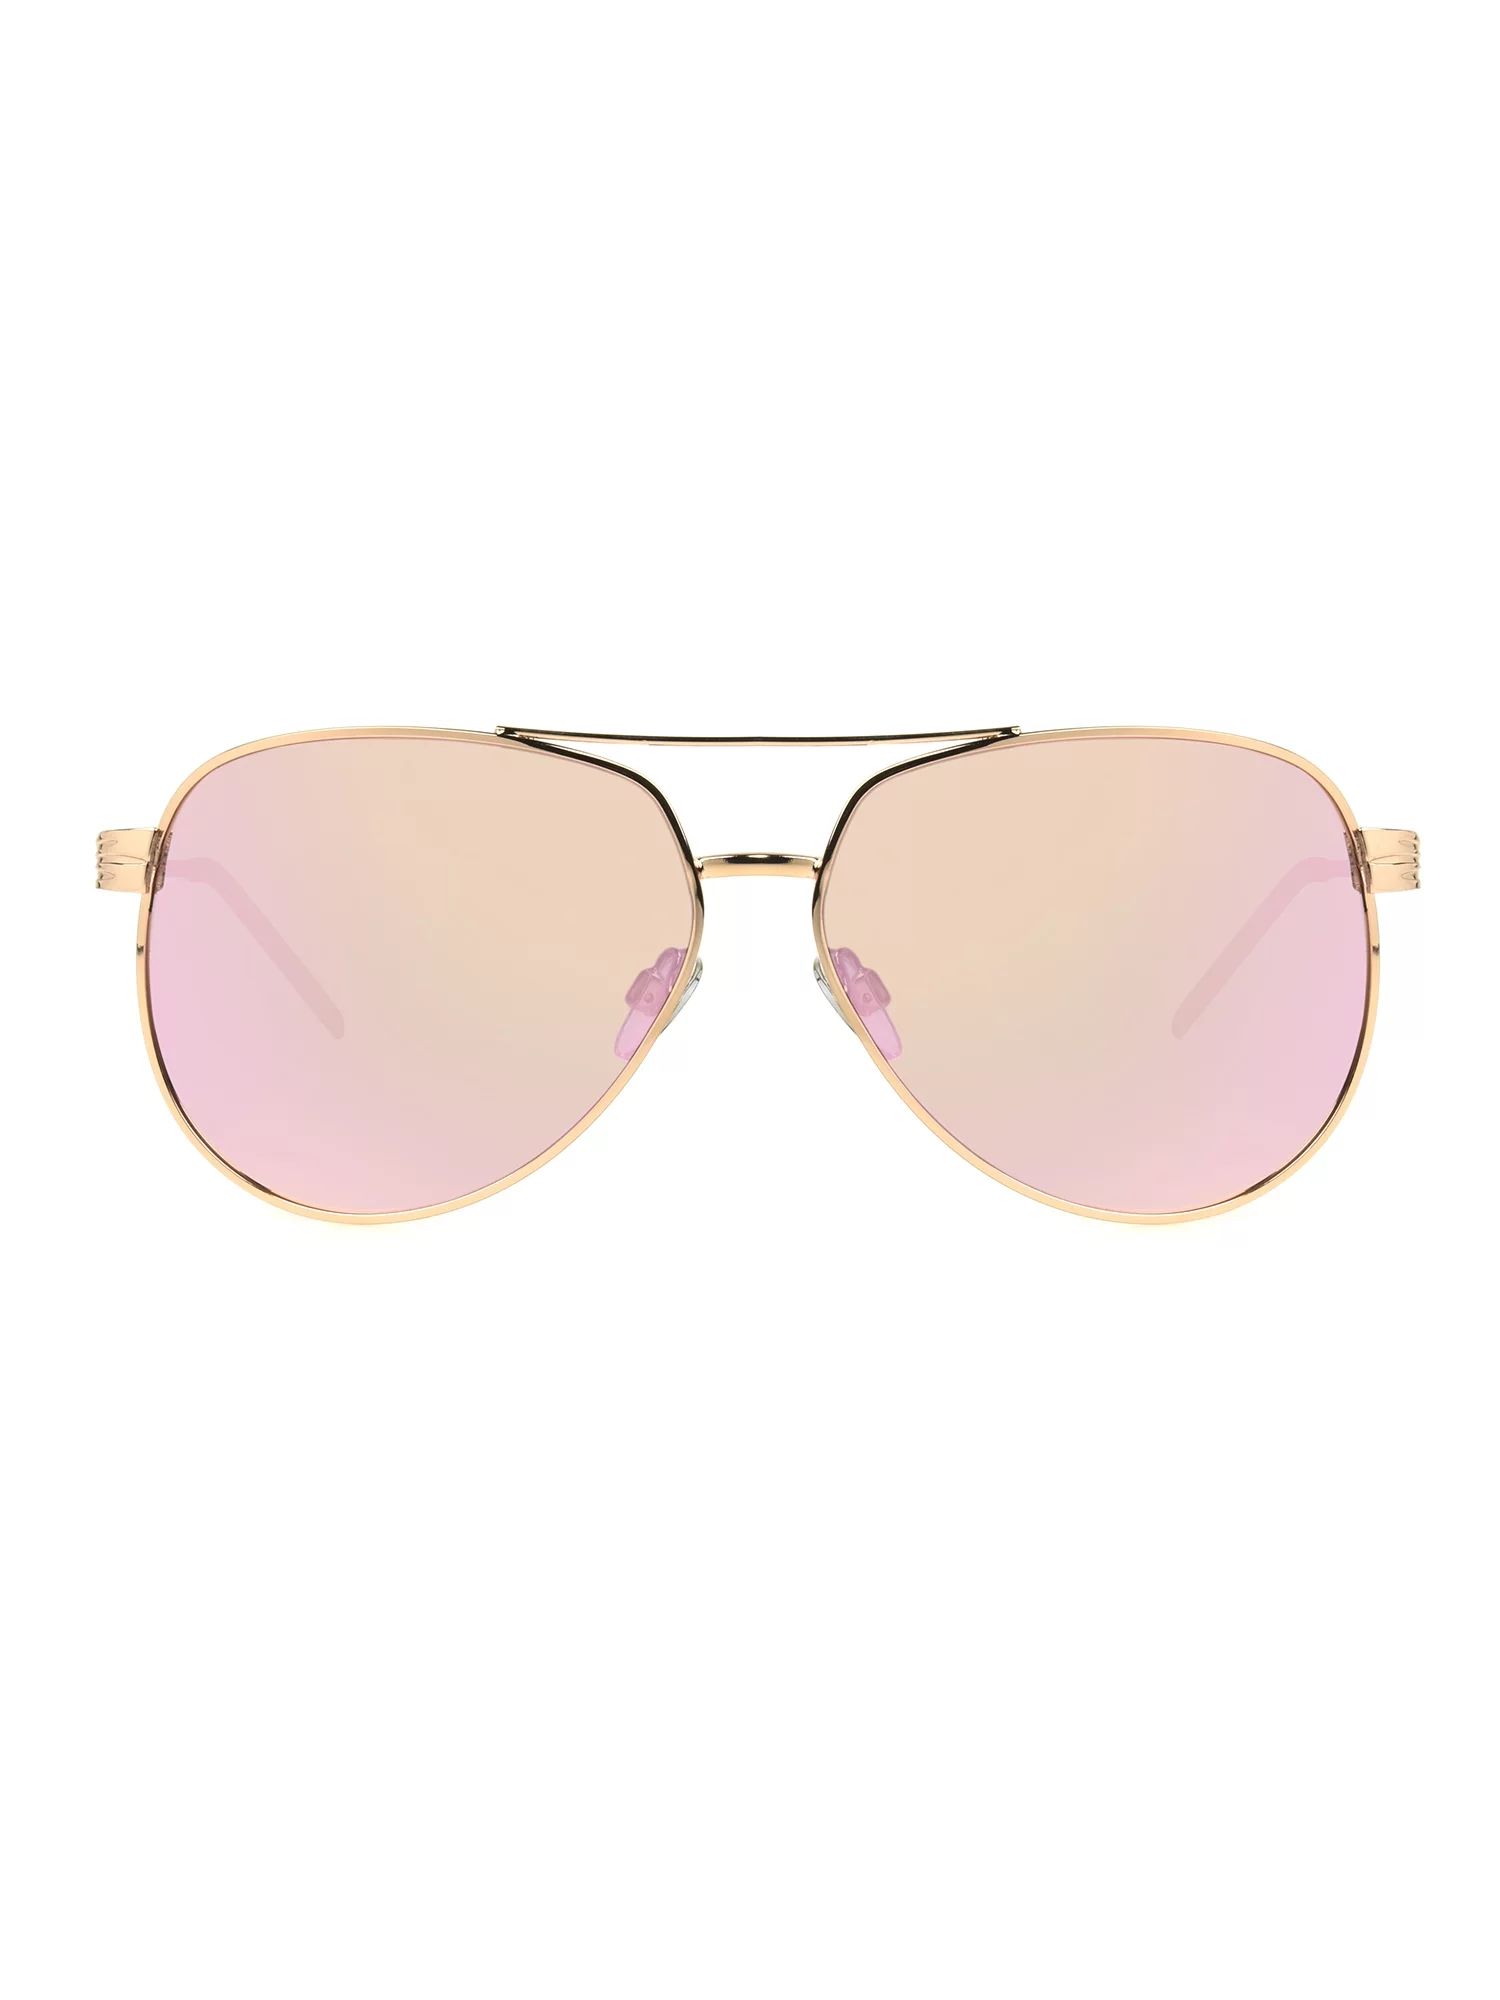 Foster Grant Women's Aviator Fashion Sunglasses Rose Gold | Walmart (US)